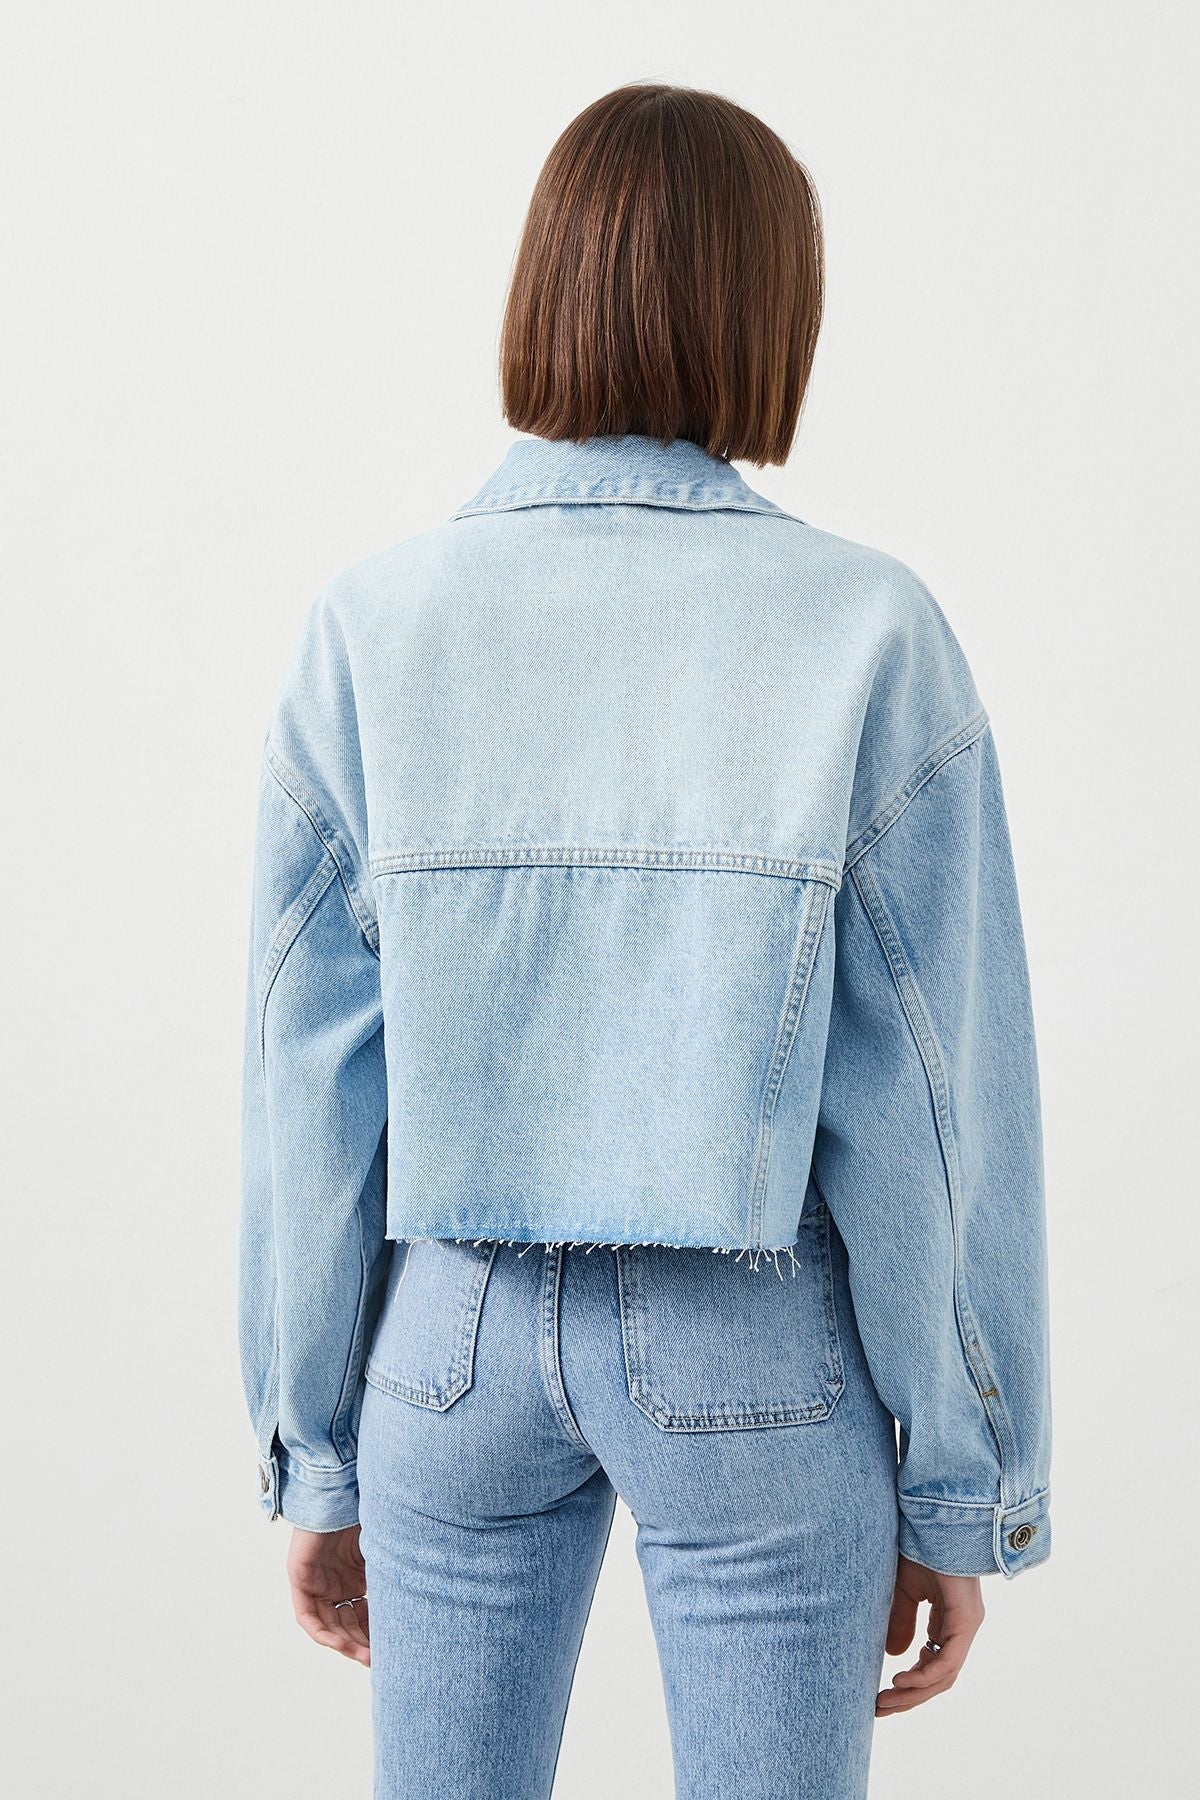 Opia Crop Oversize Fit Light Blue Women’s Denim Jacket